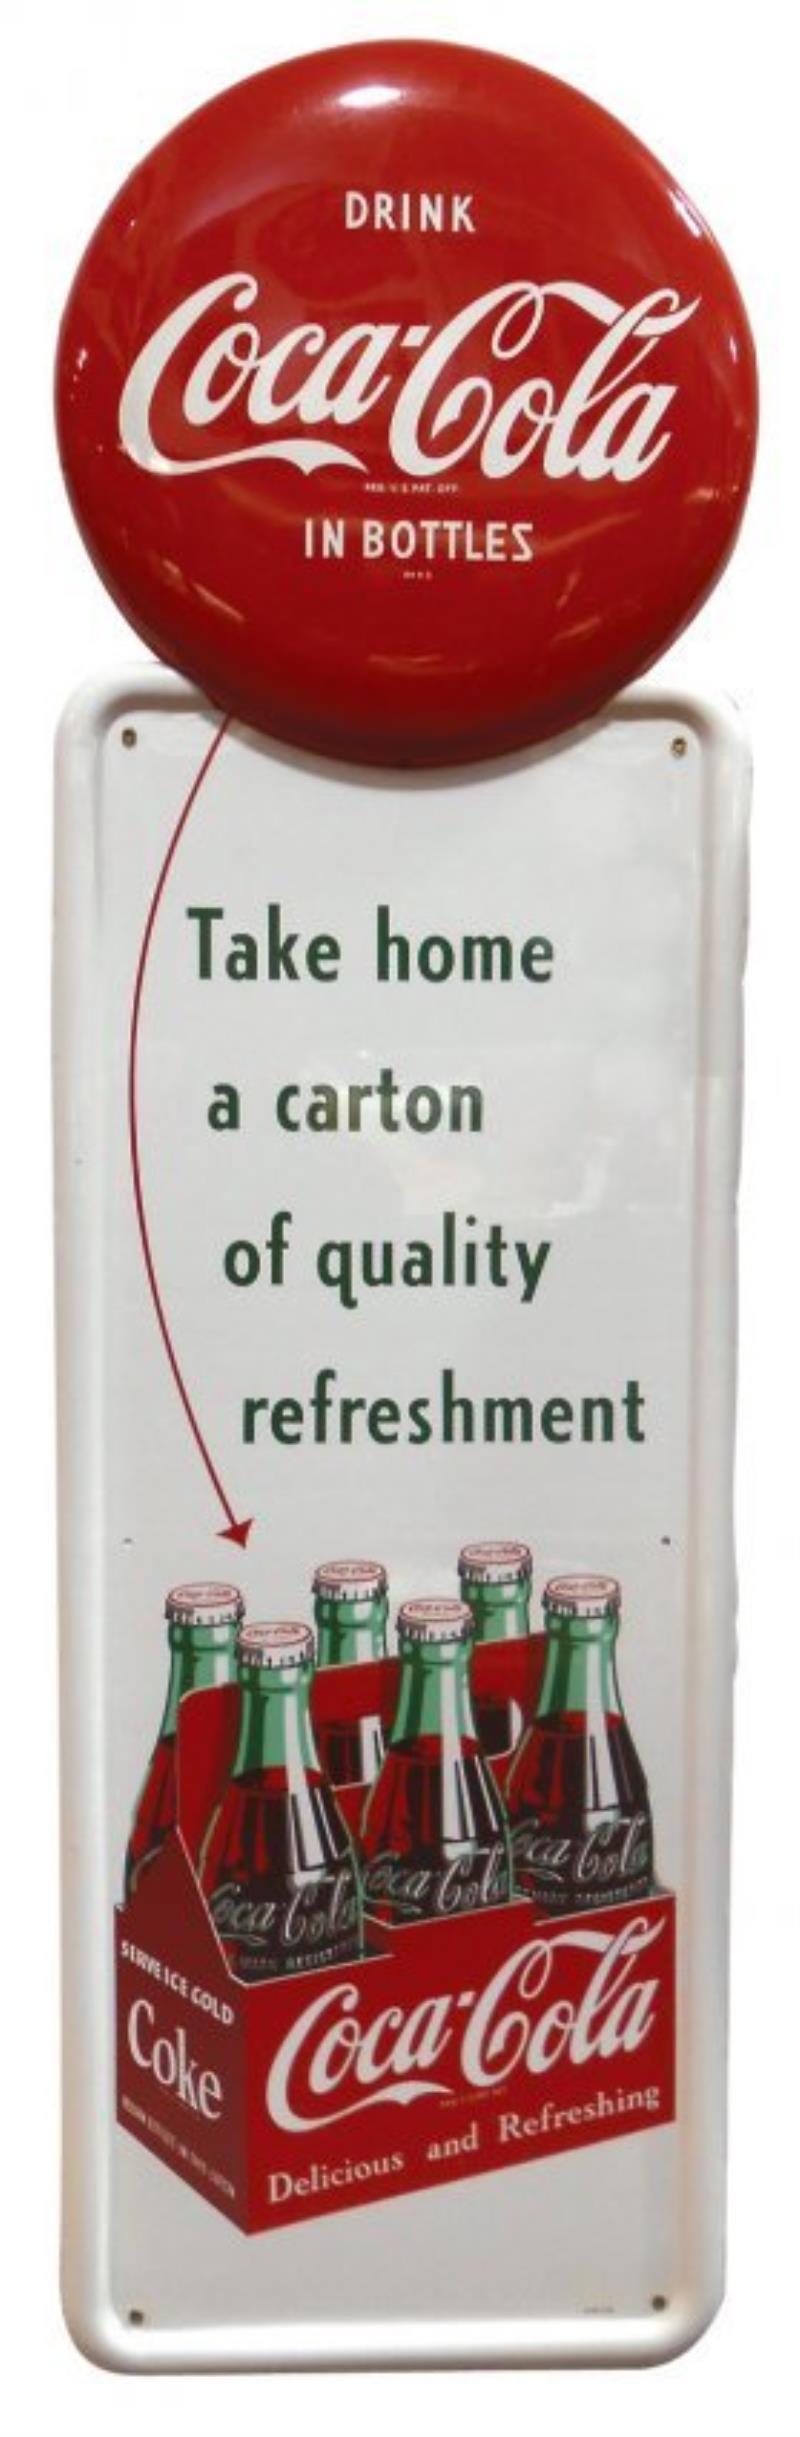 Coca-Cola sign, red button & carton graphic, "Take Home